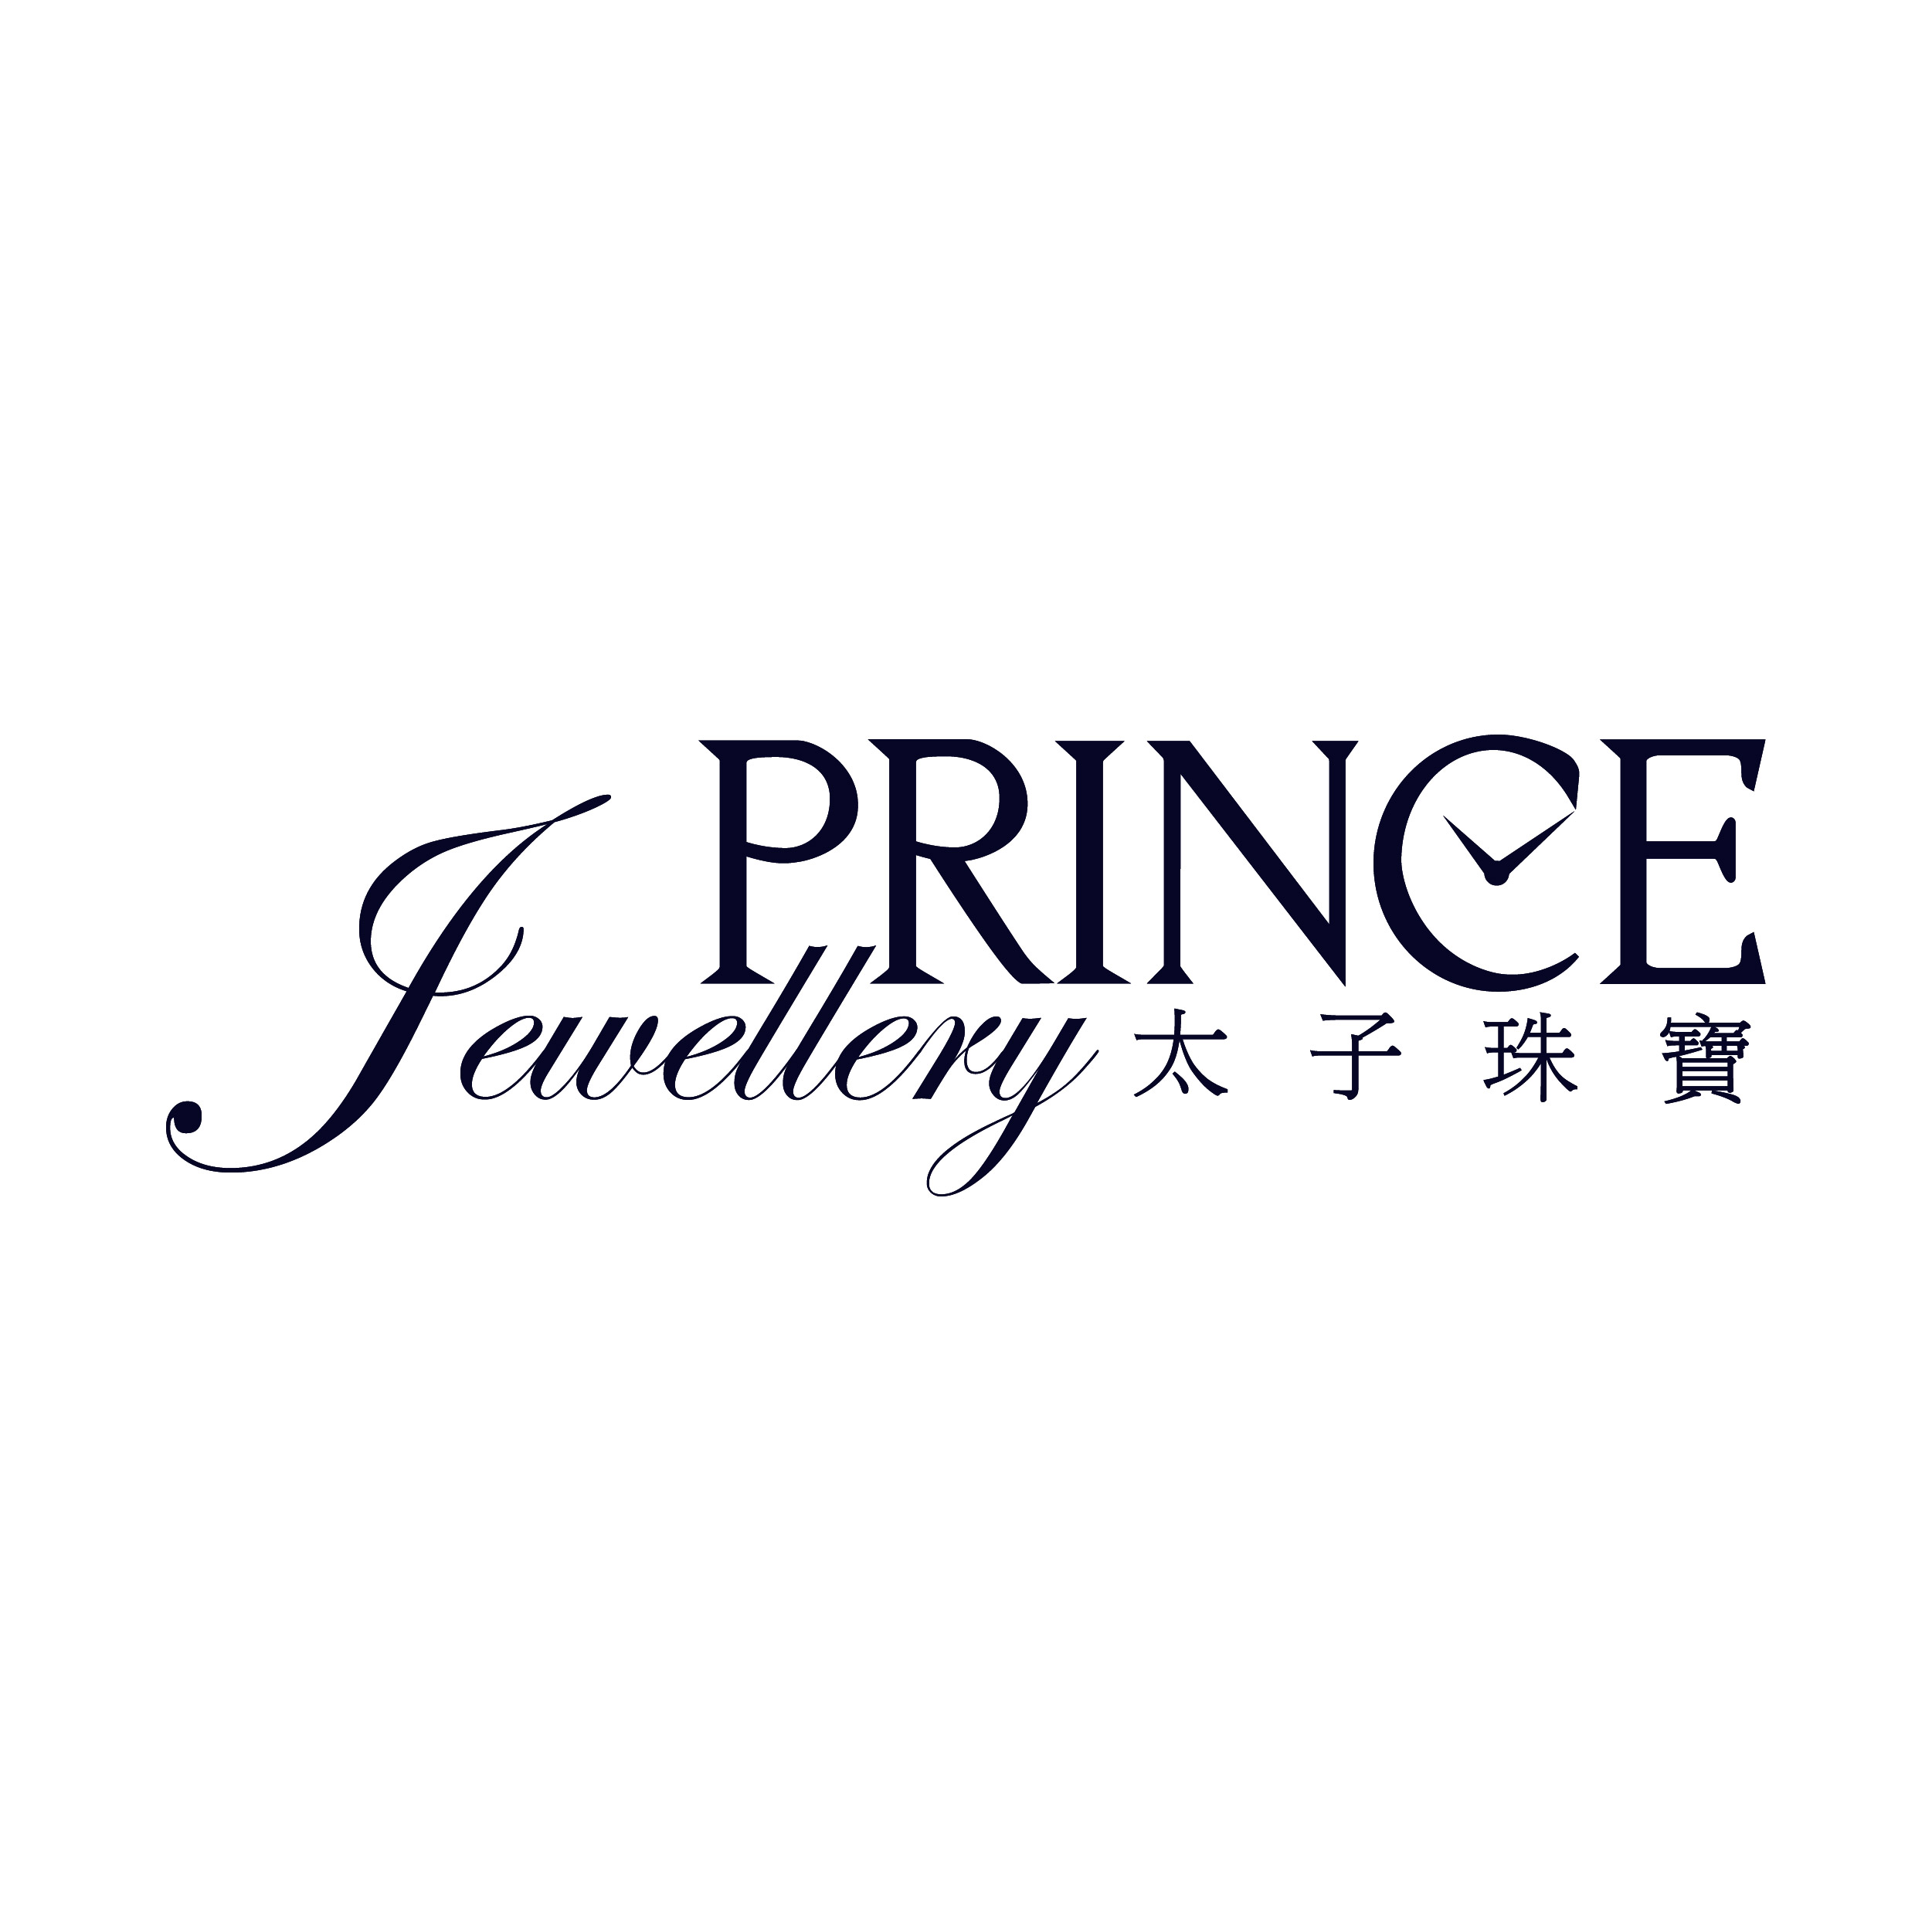 Prince_Jewellery_Logo_600x600_Dec2021.jpg